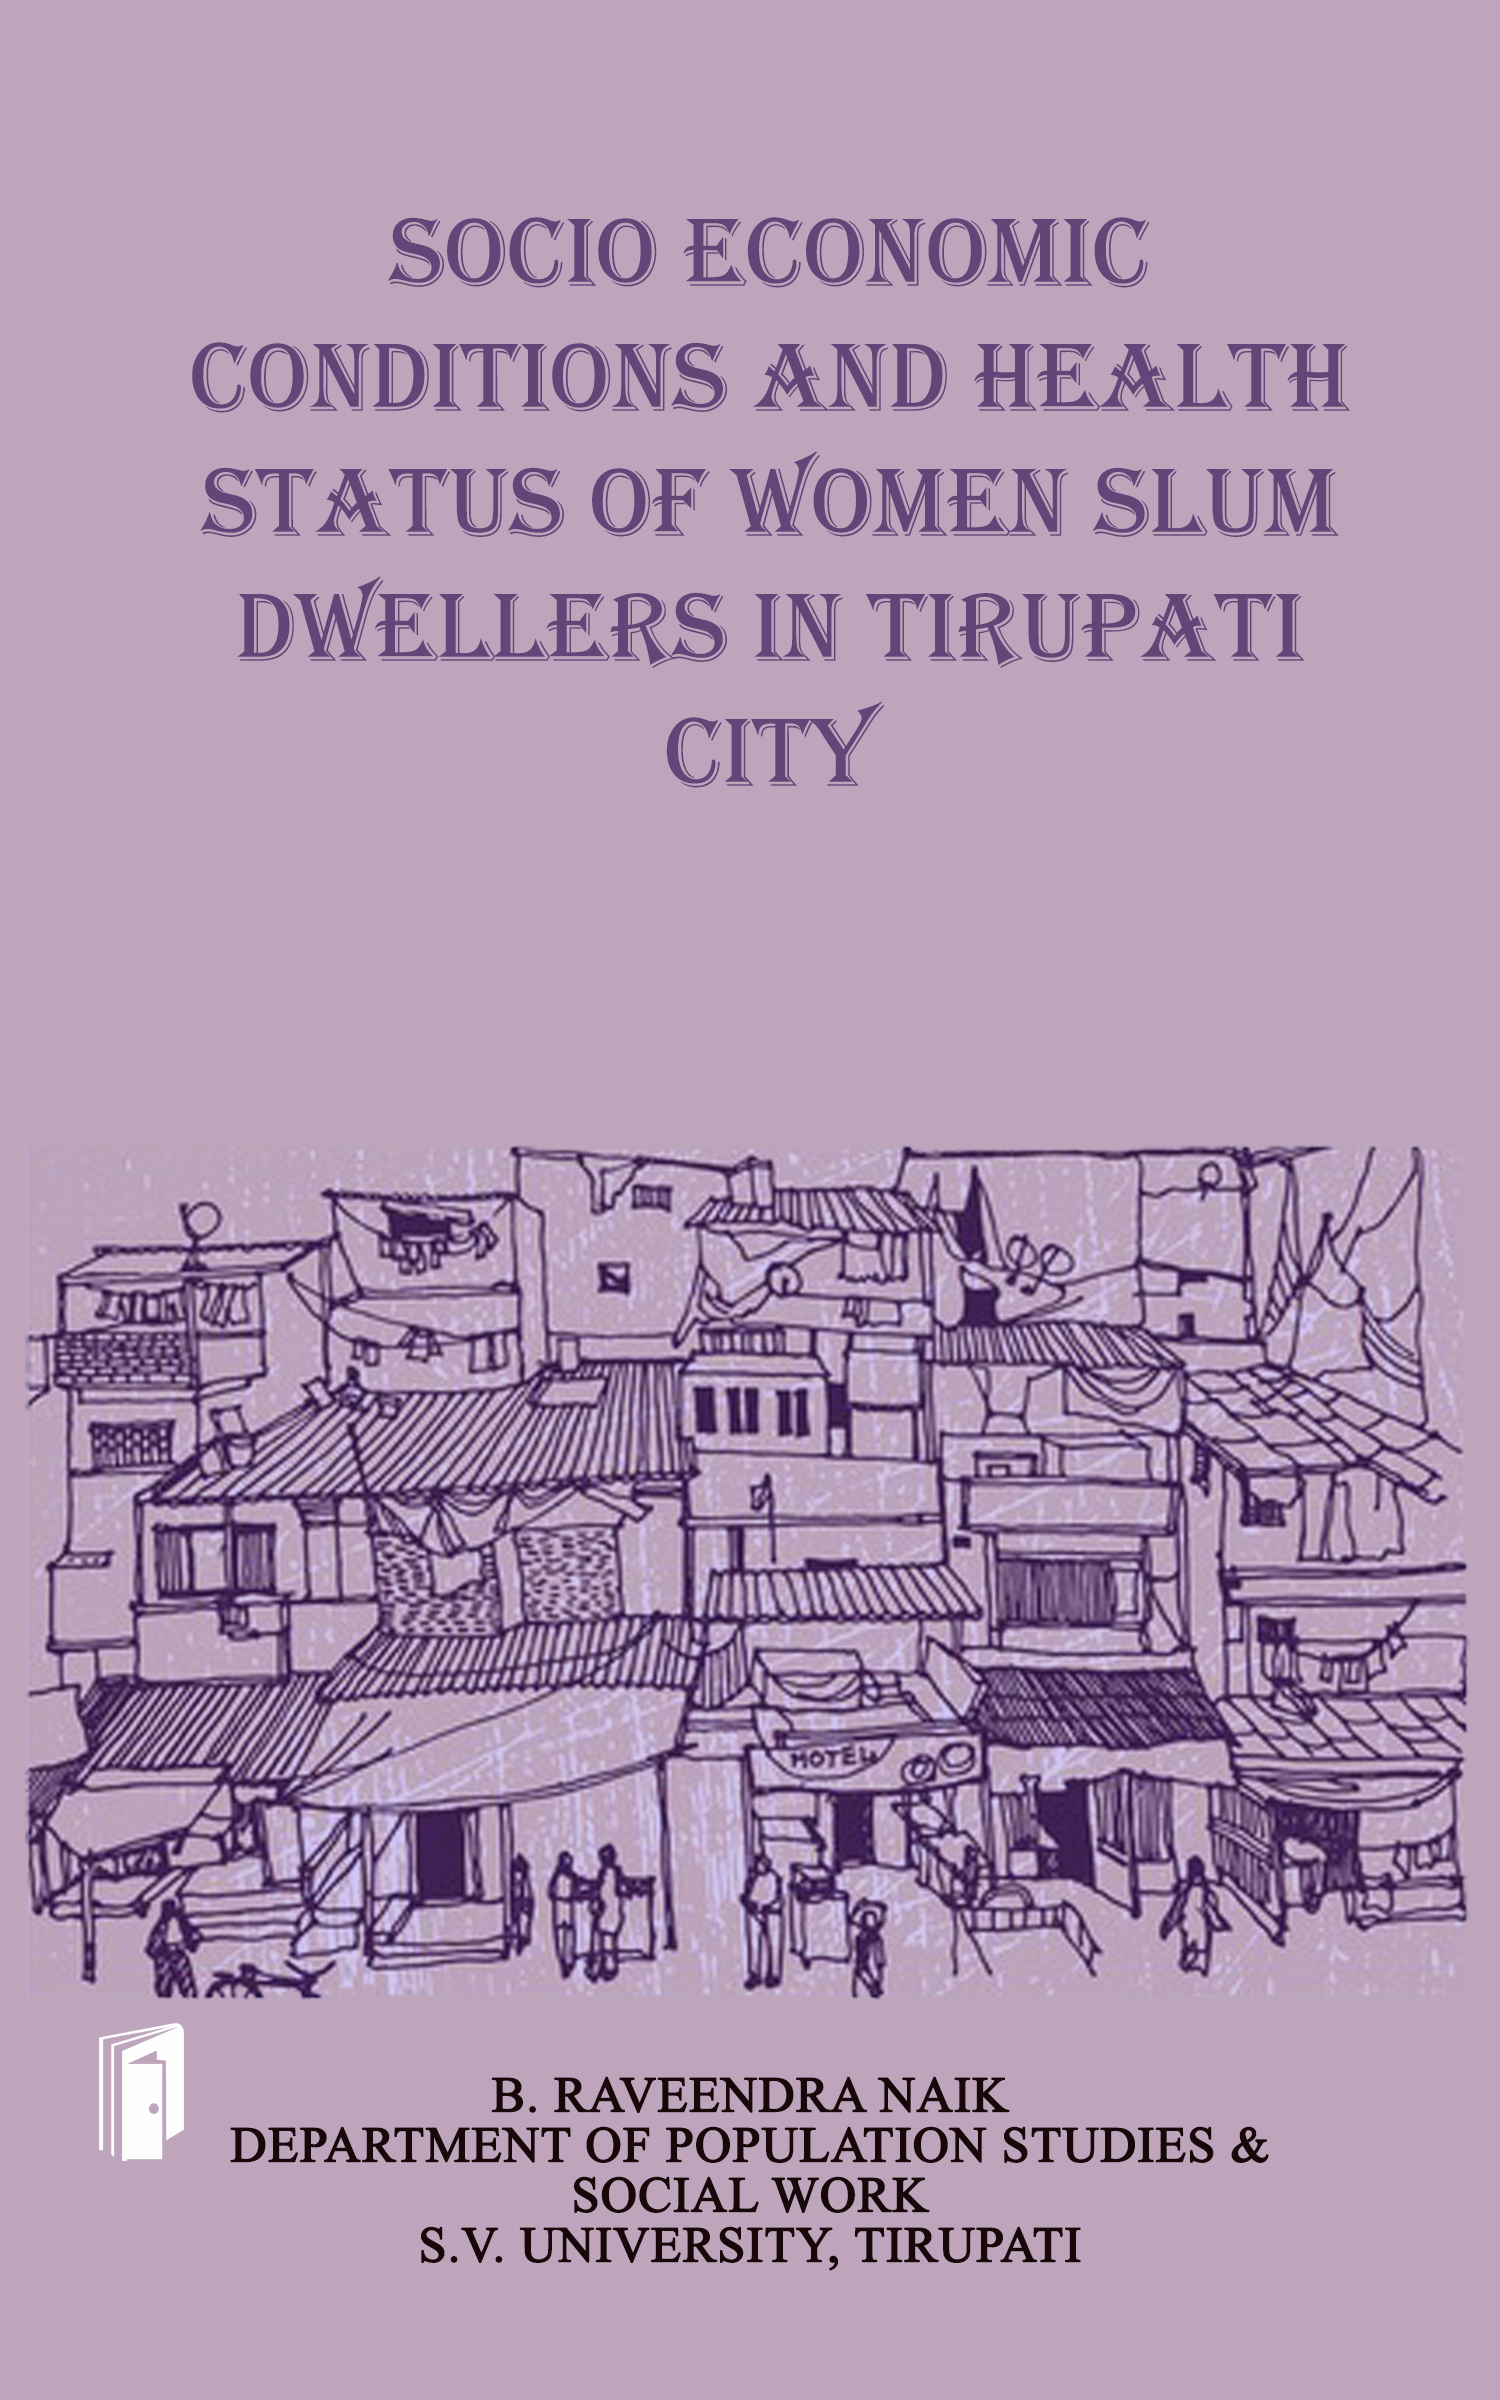 SOCIO ECONOMIC CONDITIONS AND HEALTH STATUS OF WOMEN SLUM DWELLERS IN TIRUPATI CITY